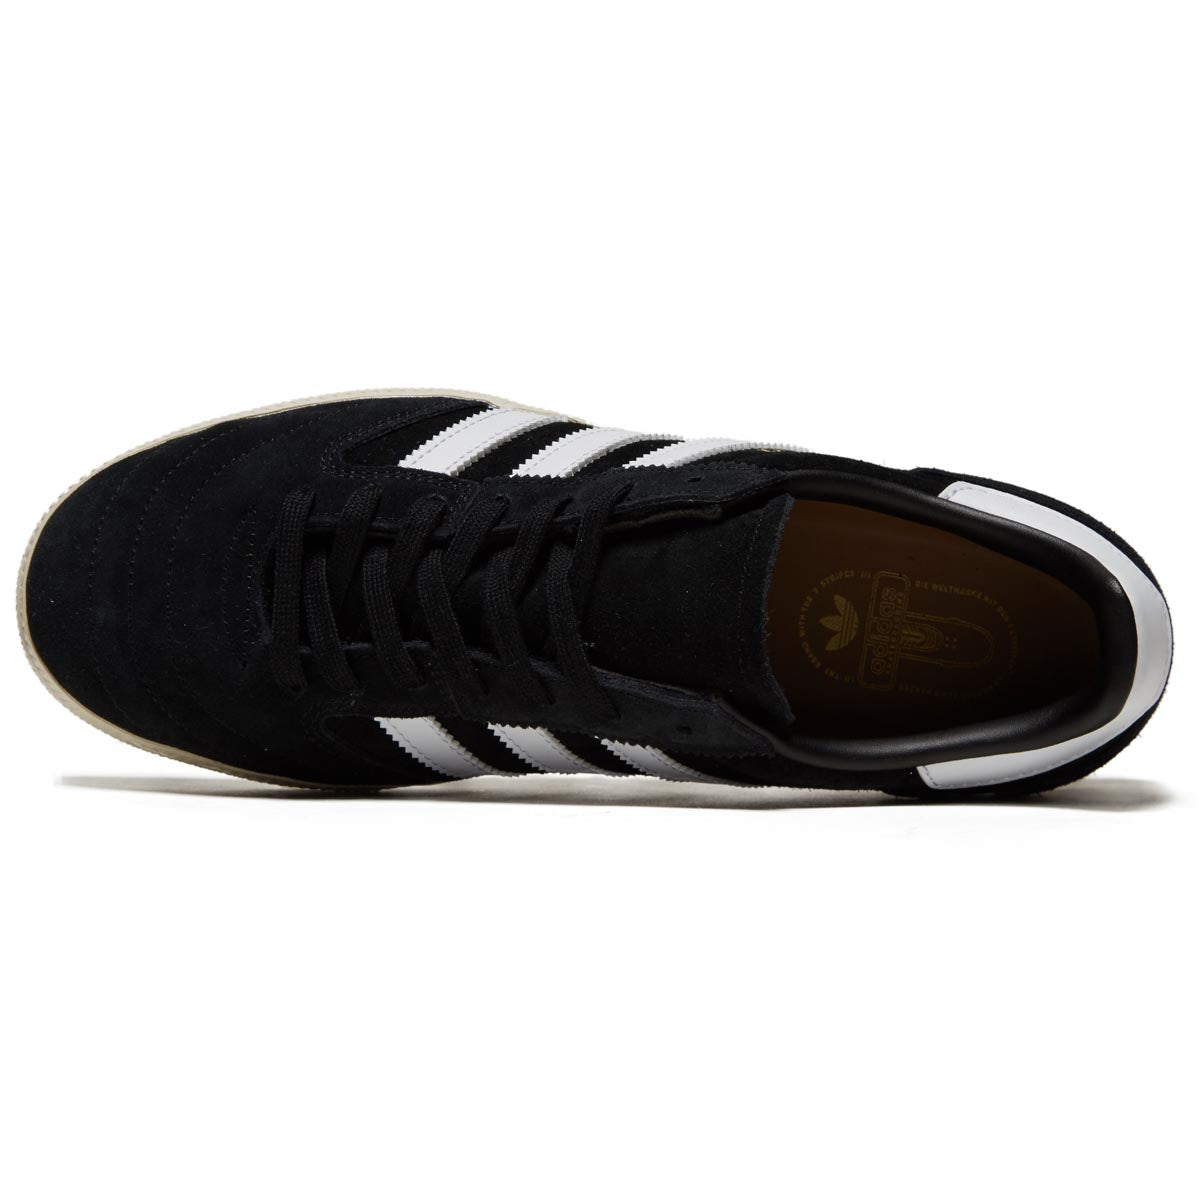 Adidas Busenitz Vintage Shoes - Black/White/Chalk White image 3